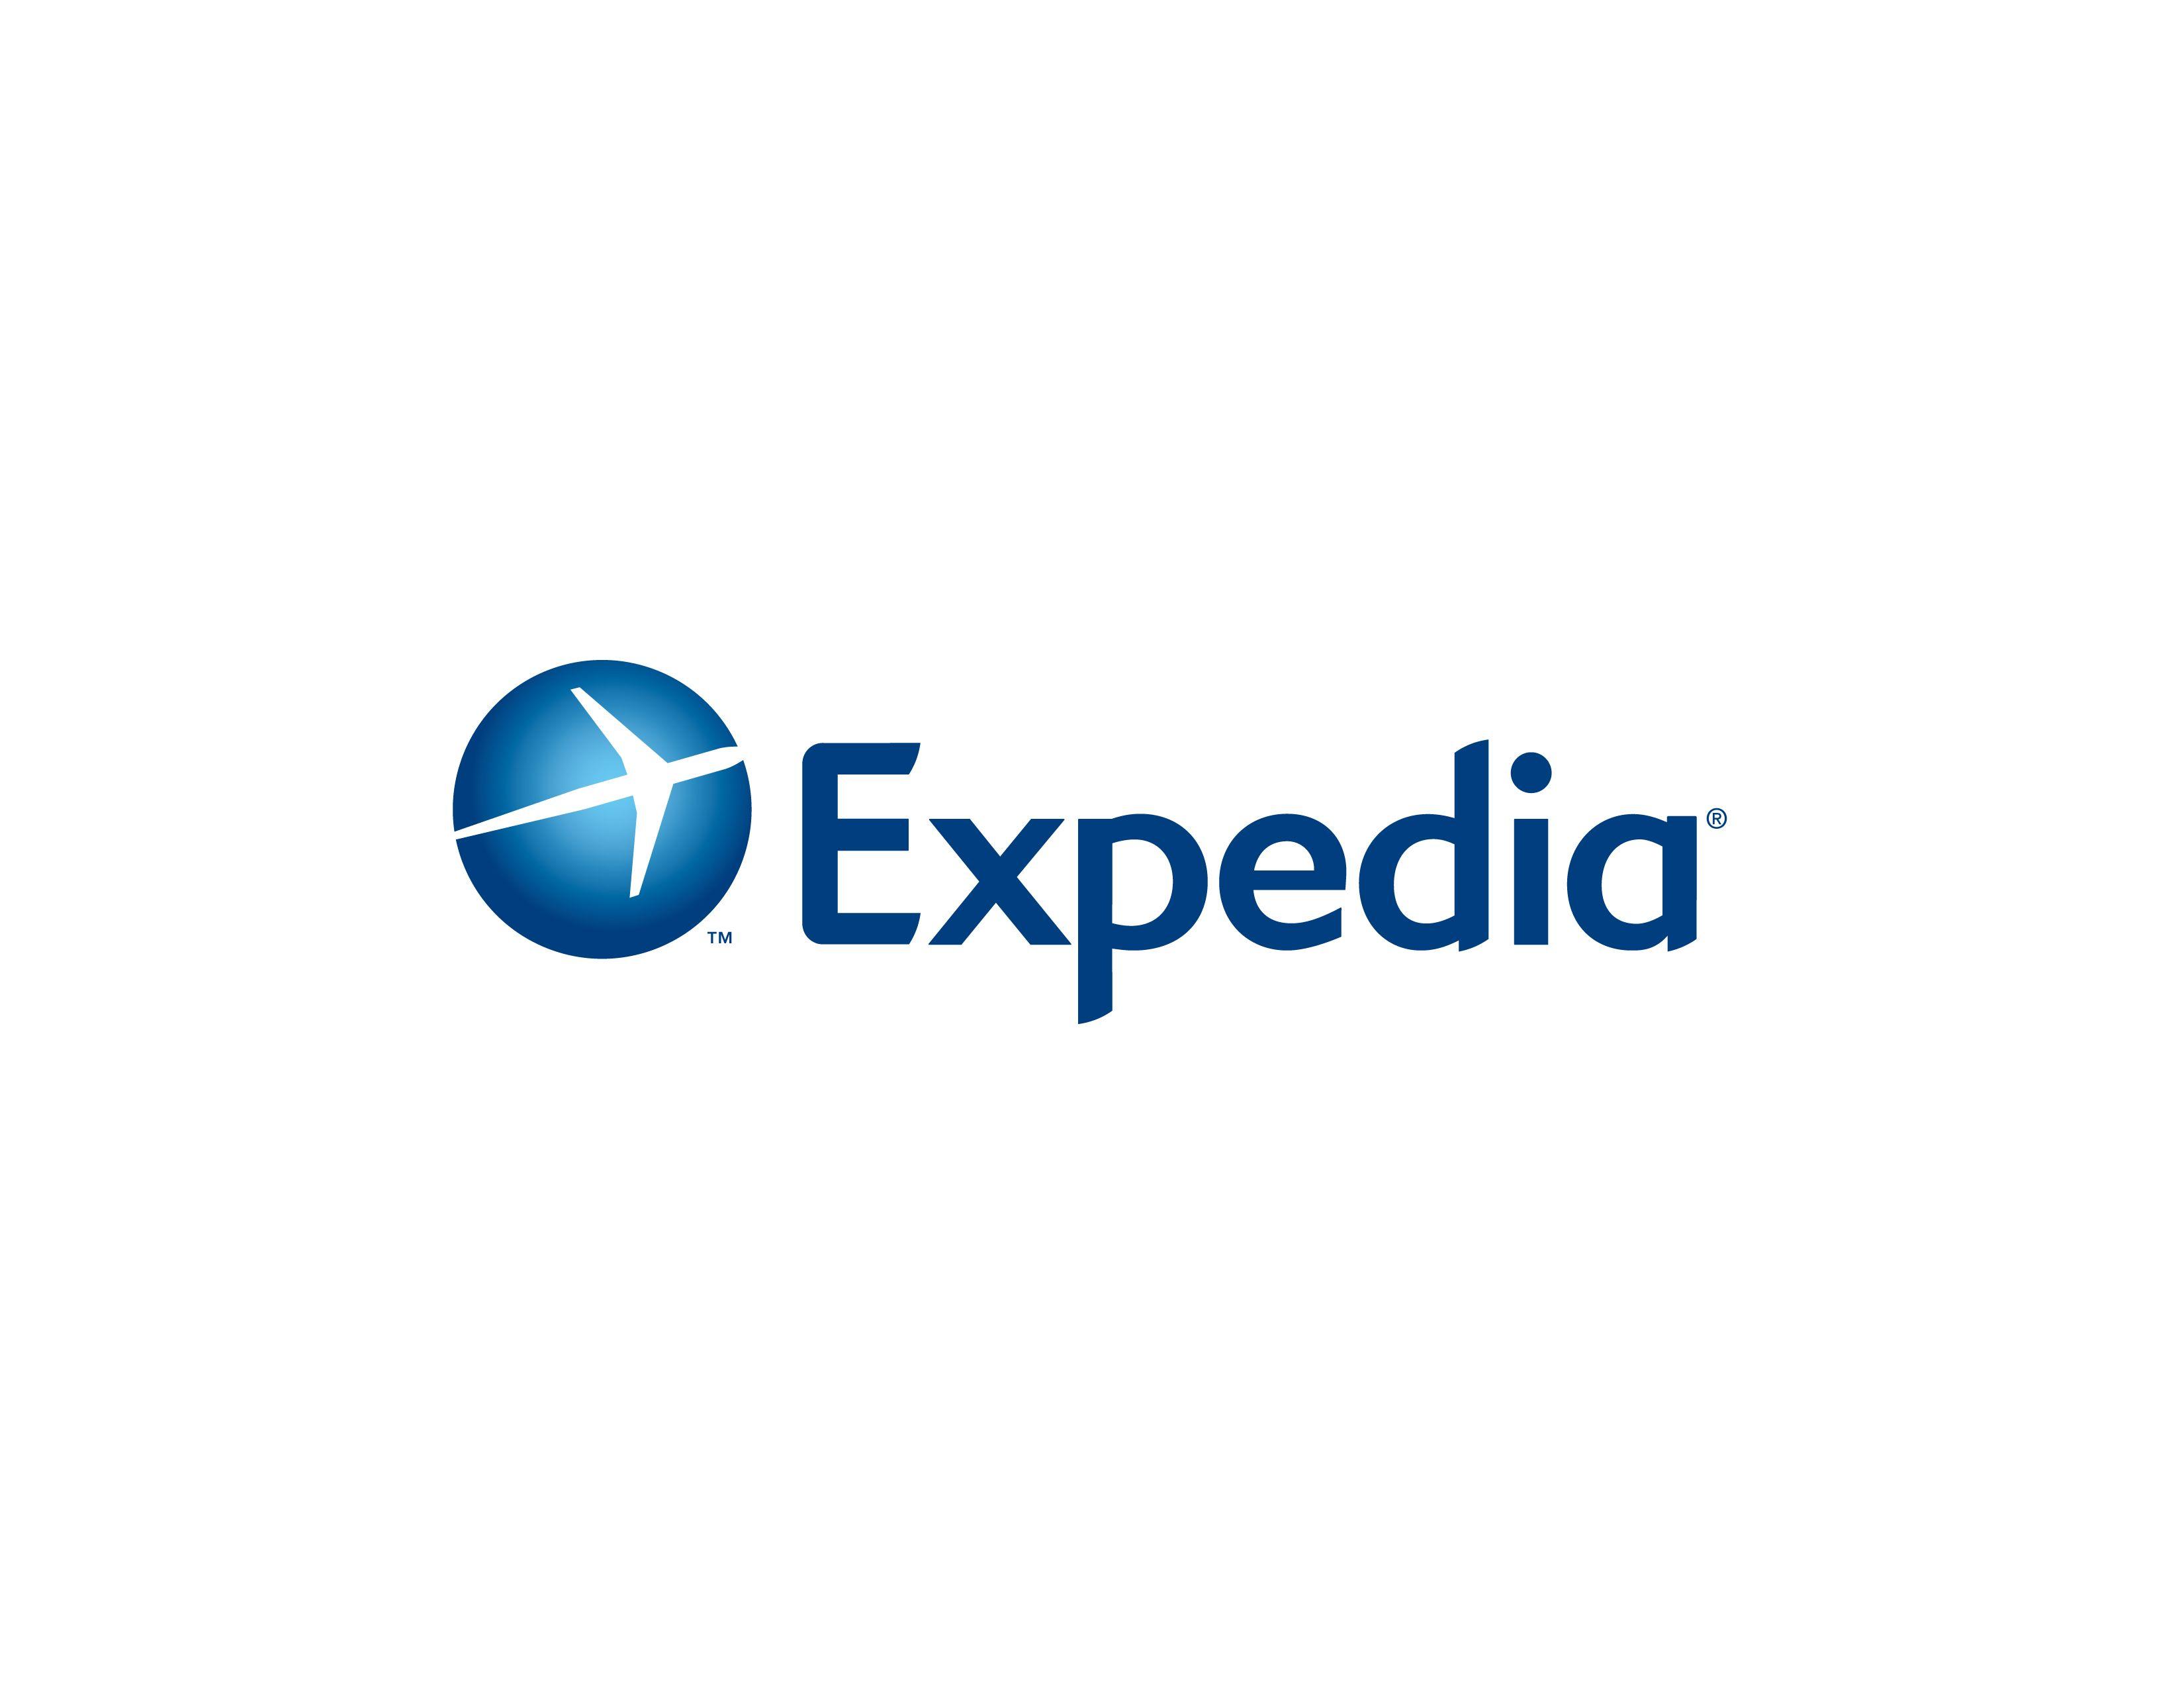 Expidia Logo - expedia logo - Tradefair Hotels - Düsseldorf - Cologne - Frankfurt ...